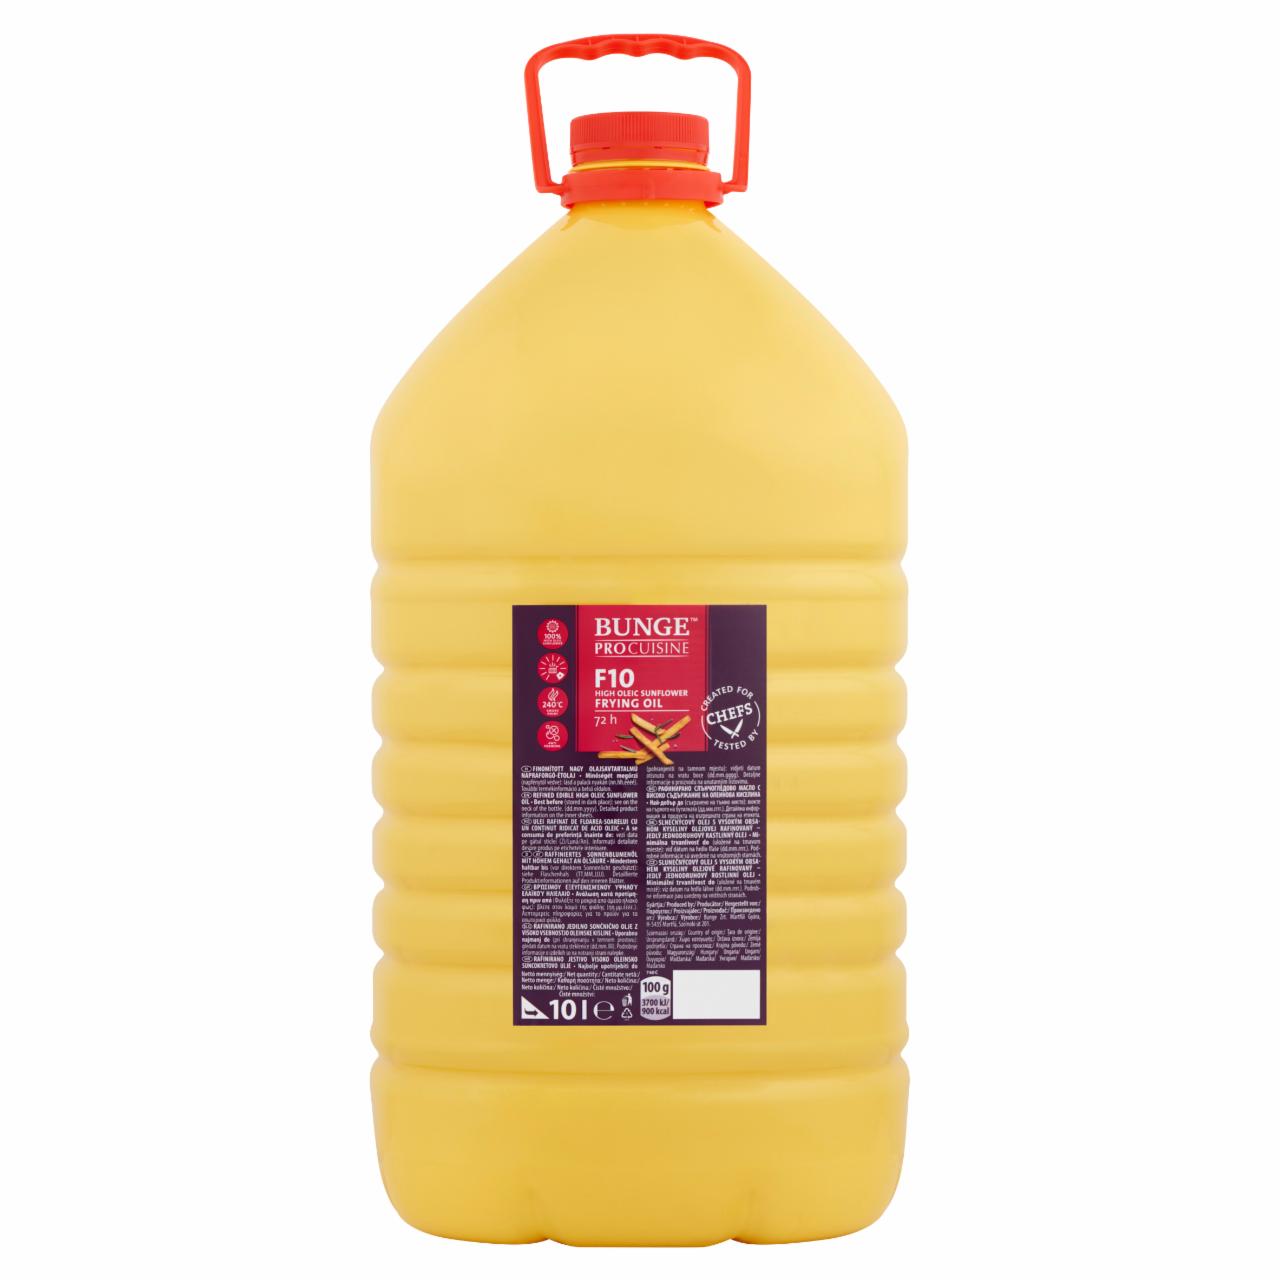 Képek - Bunge ProCuisine F10 finomított nagy olajsavtartalmú napraforgó étolaj 10 l